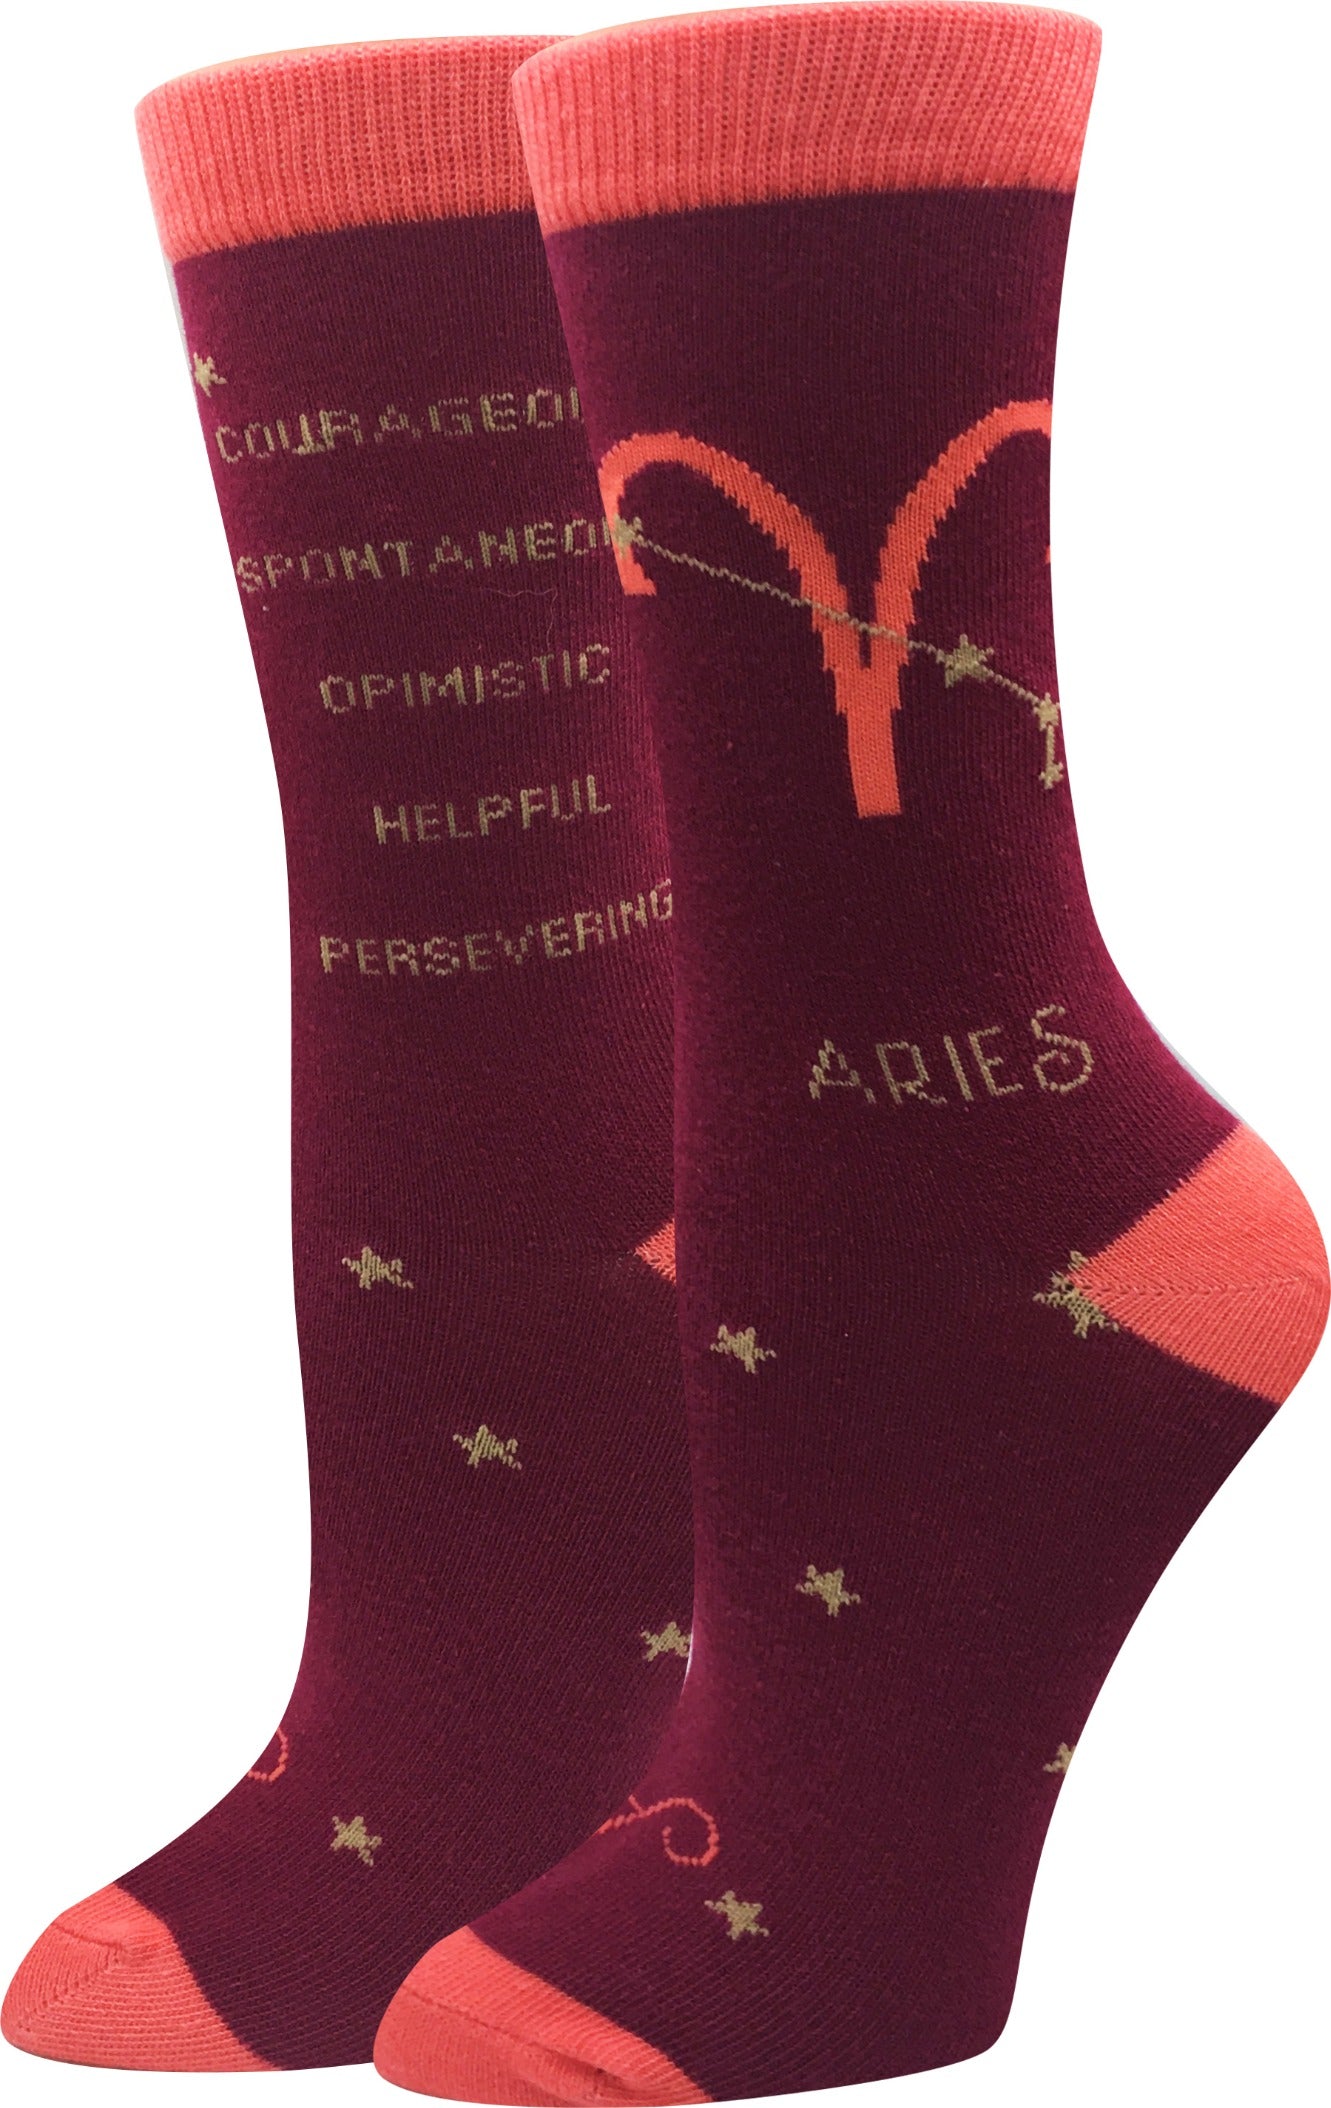 Aries Socks